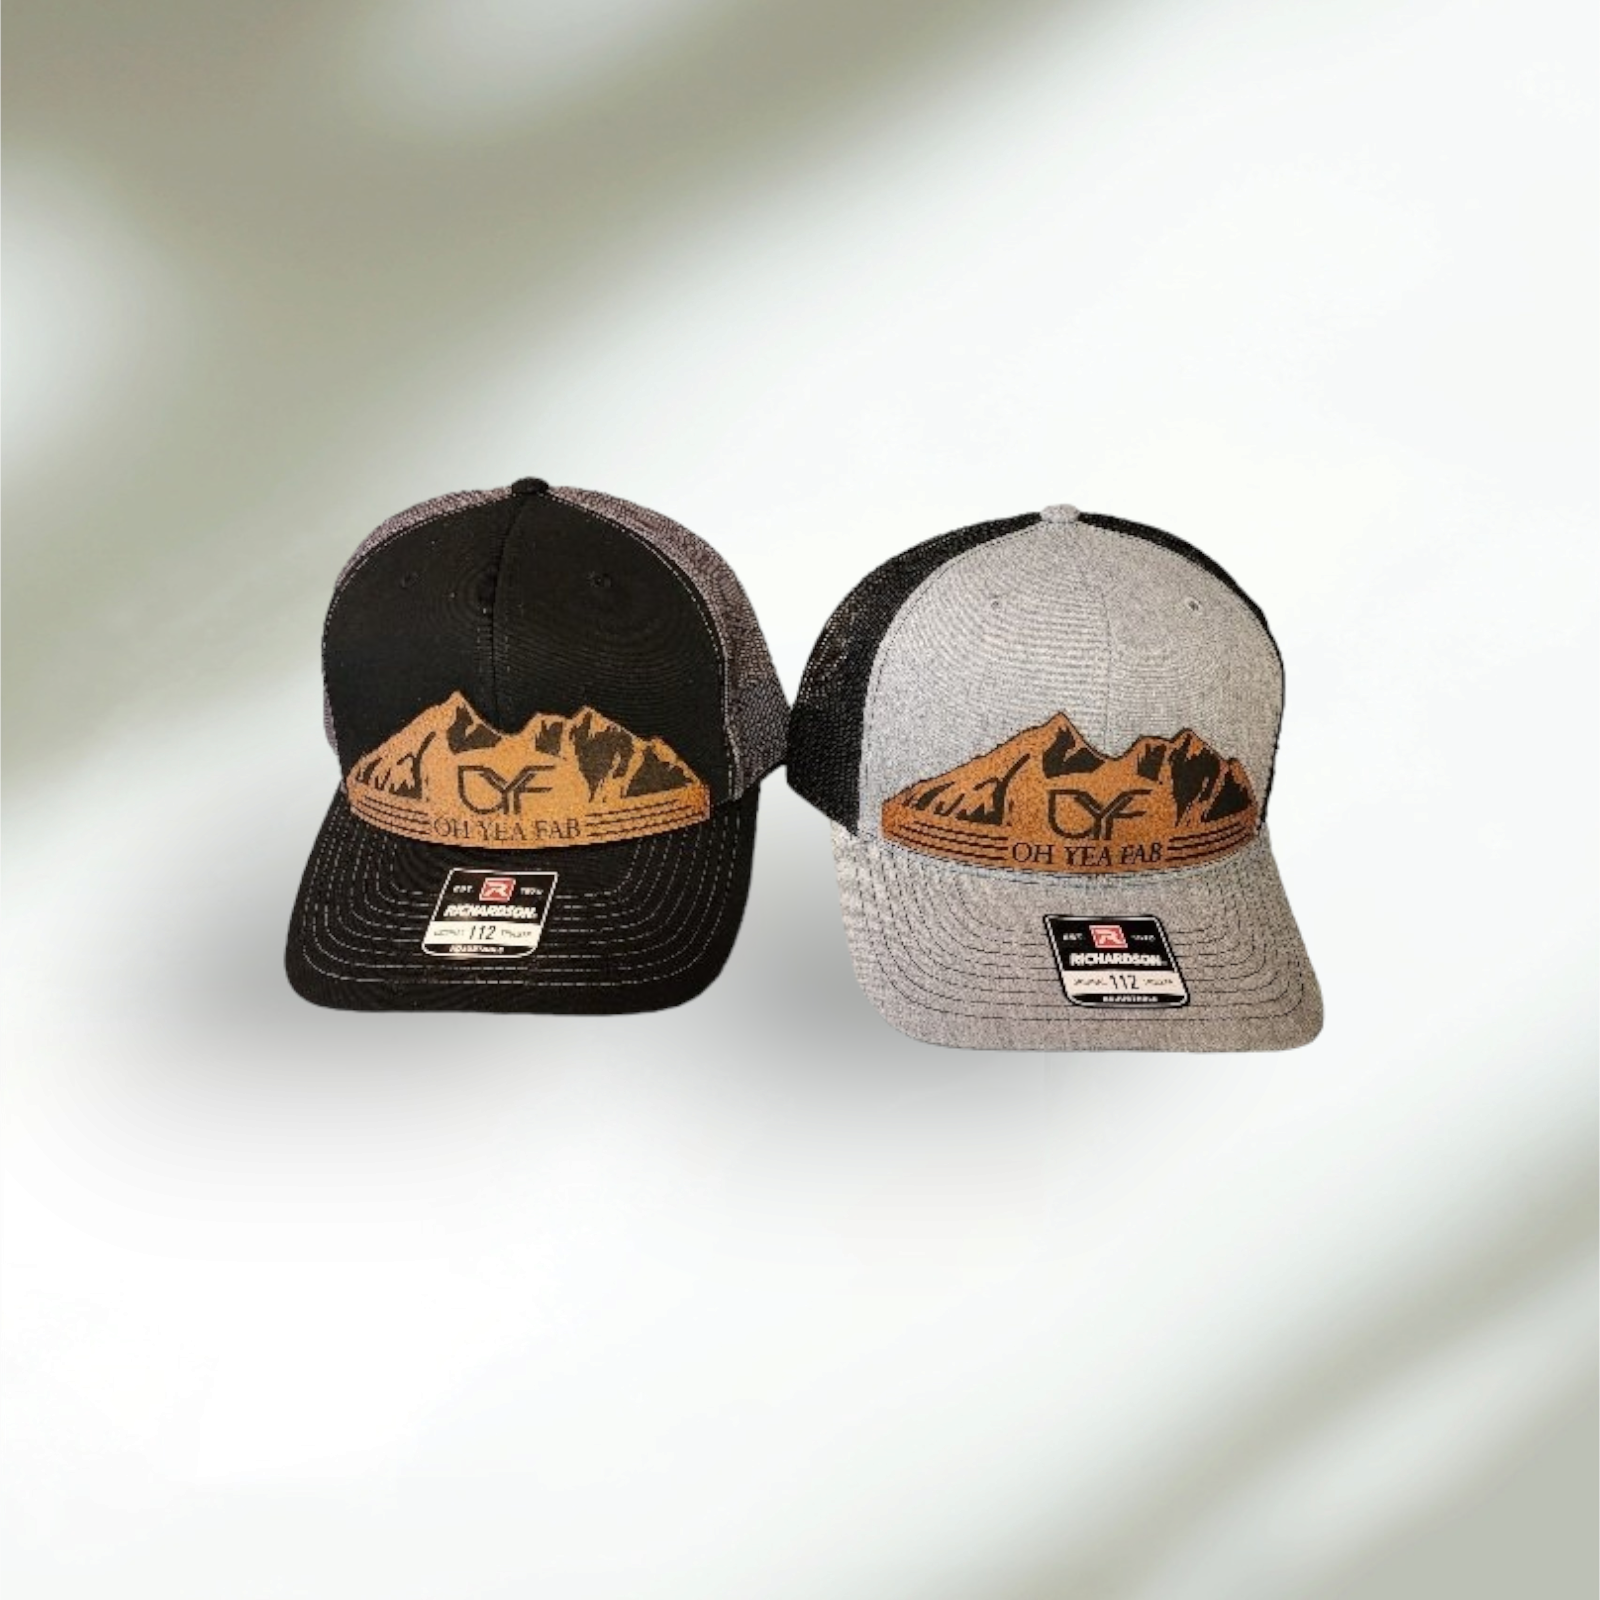 Leather Patch Emblems Hats Ball Caps - ohyeafab llc